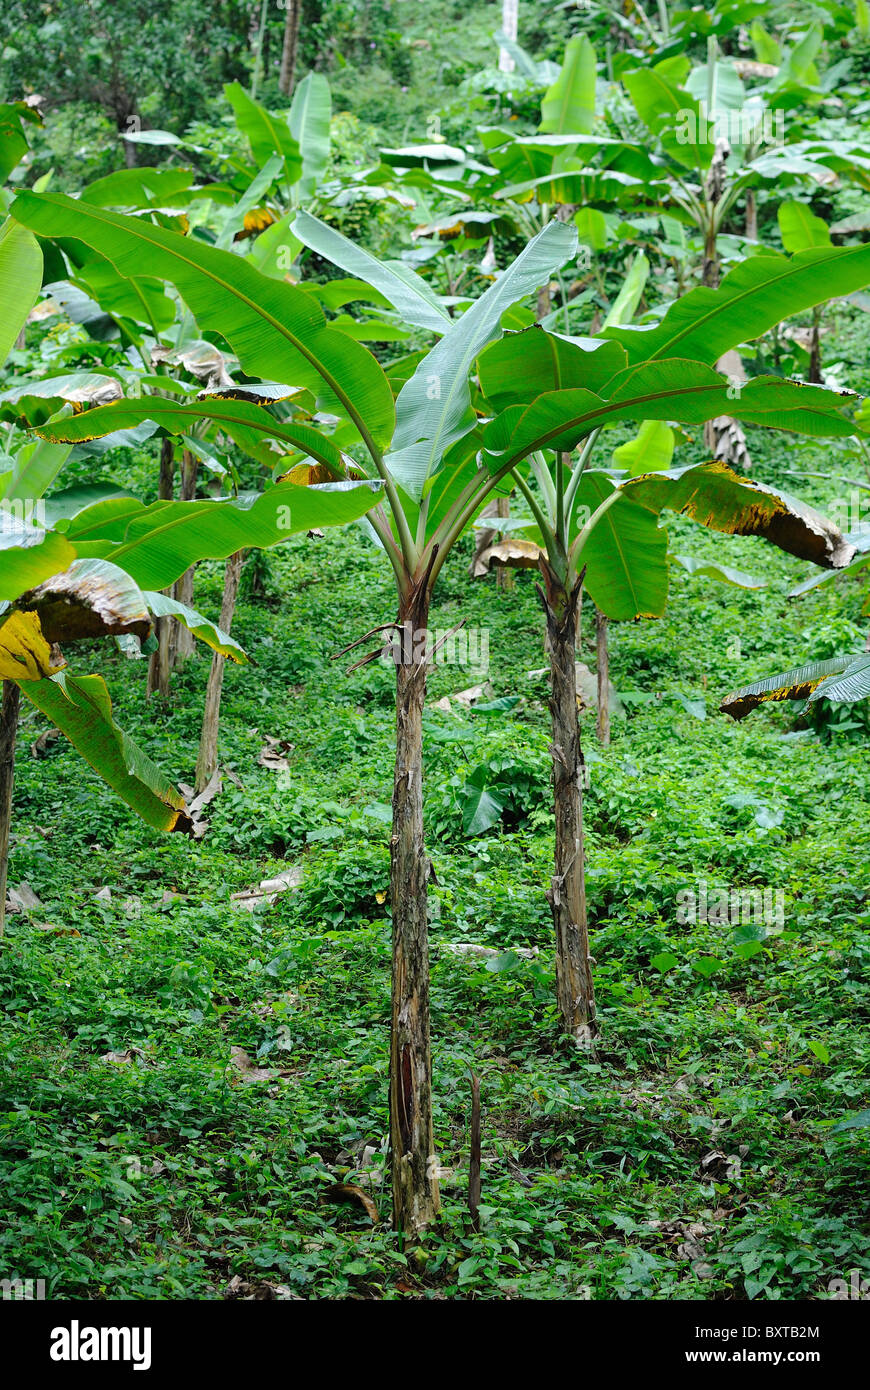 Young banana trees on a banana plantation Stock Photo